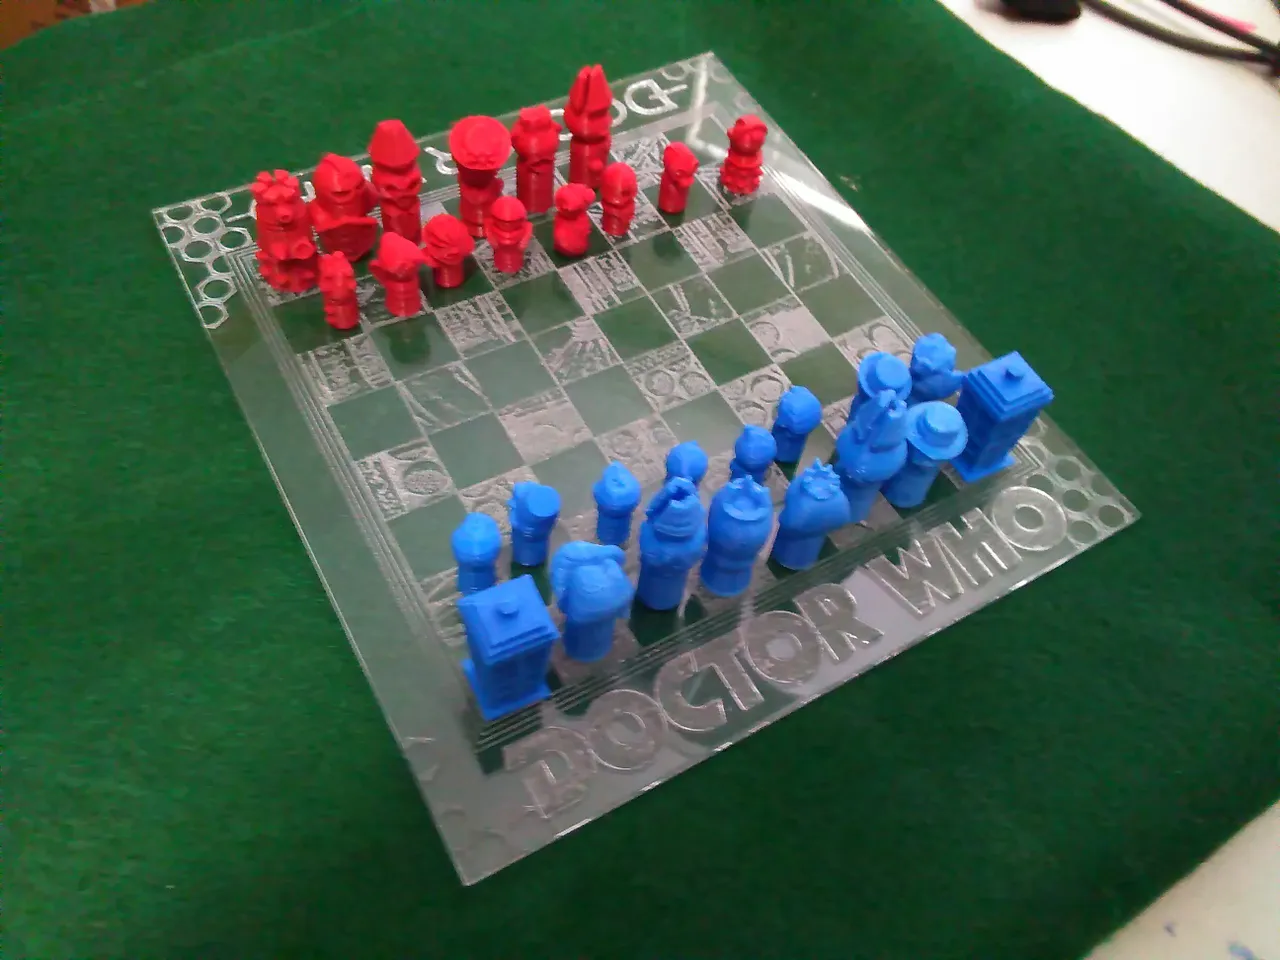 Chess-playing Cyberman, Tardis